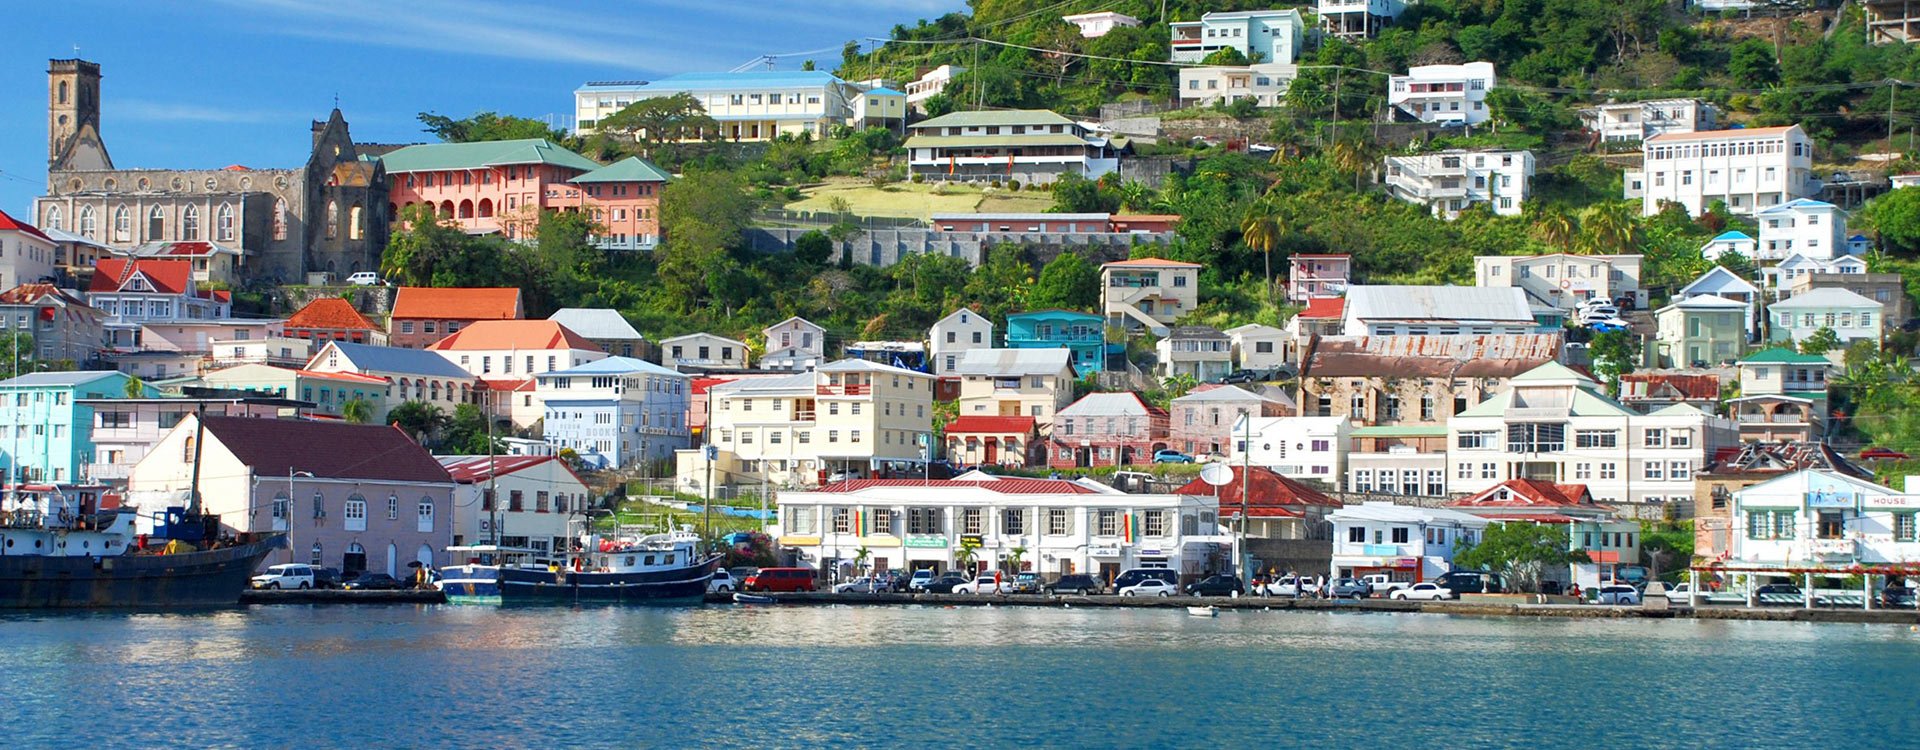 Luxury Holidays to Grenada